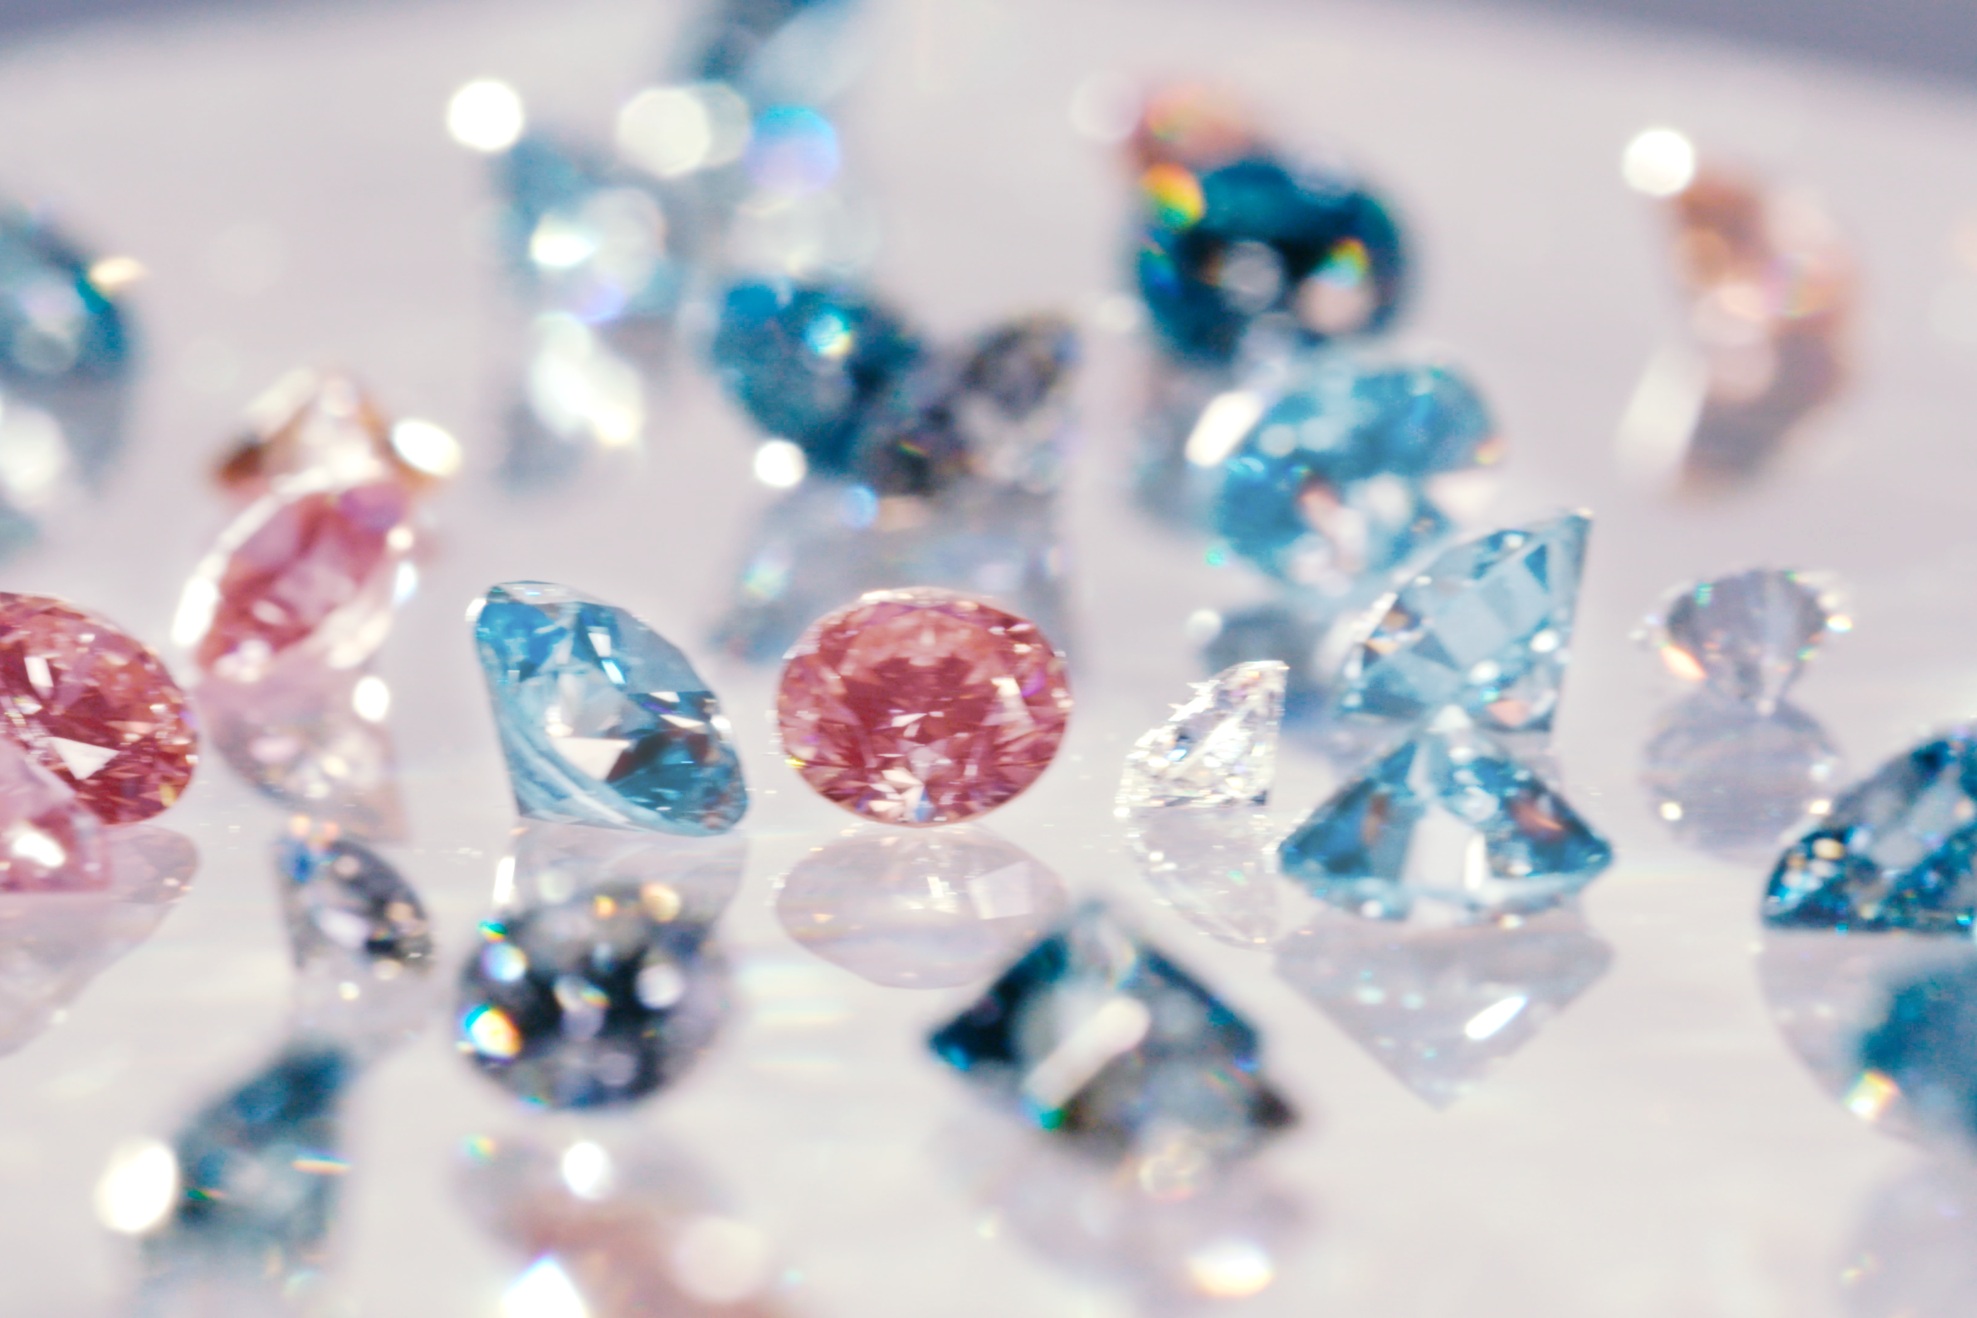 Beyond the hype of lab-grown diamonds